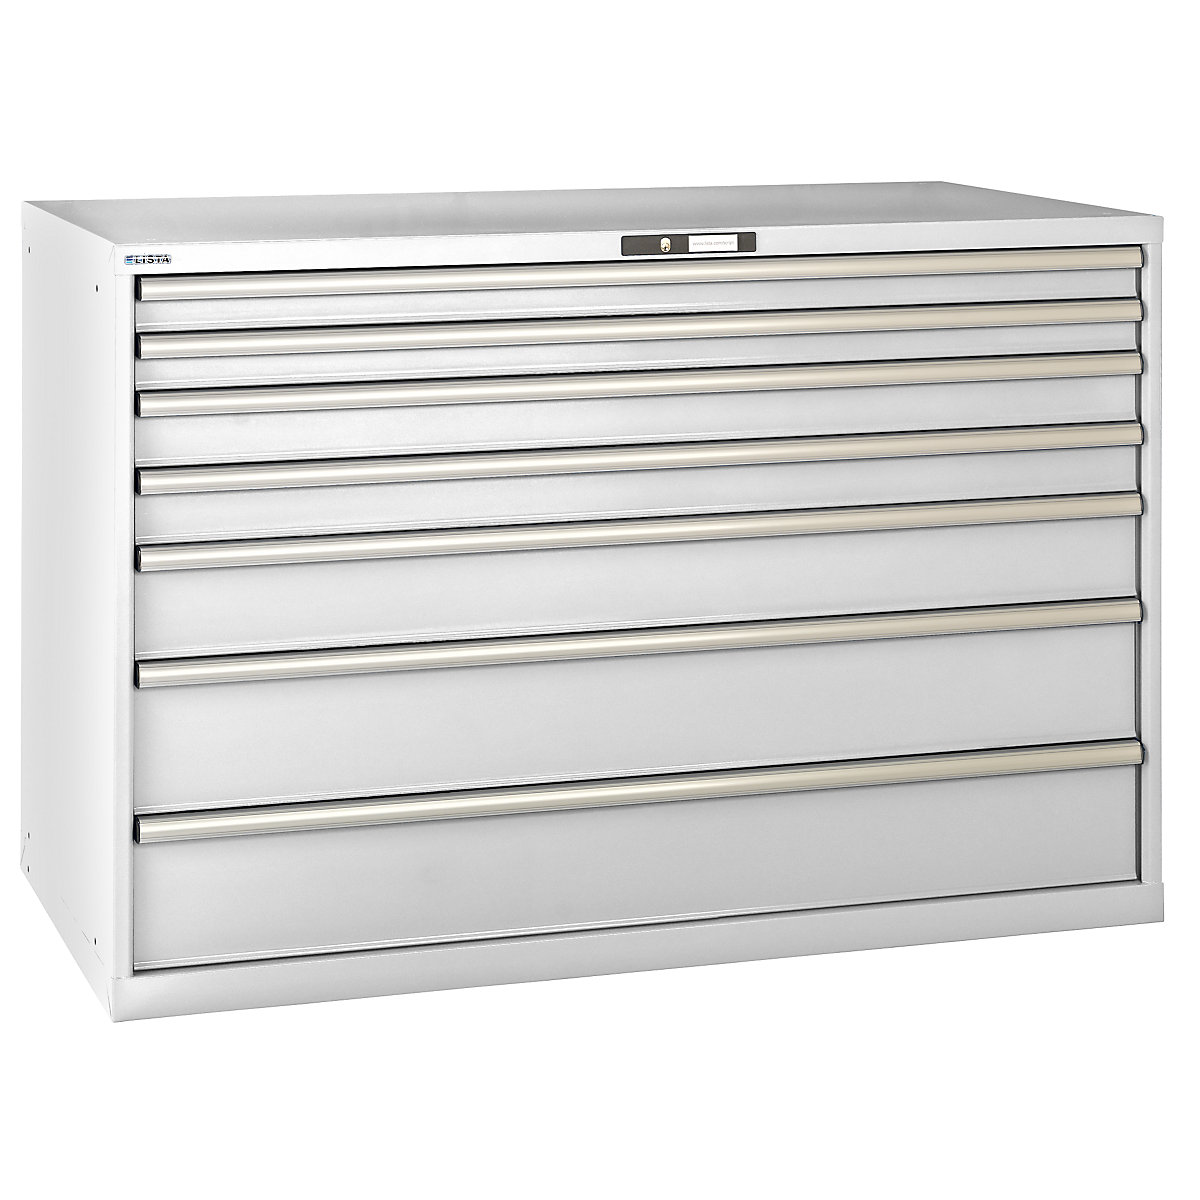 Drawer cupboard, sheet steel – LISTA, HxW 1000 x 1431 mm, 7 drawers, max. load 200 kg, light grey-9